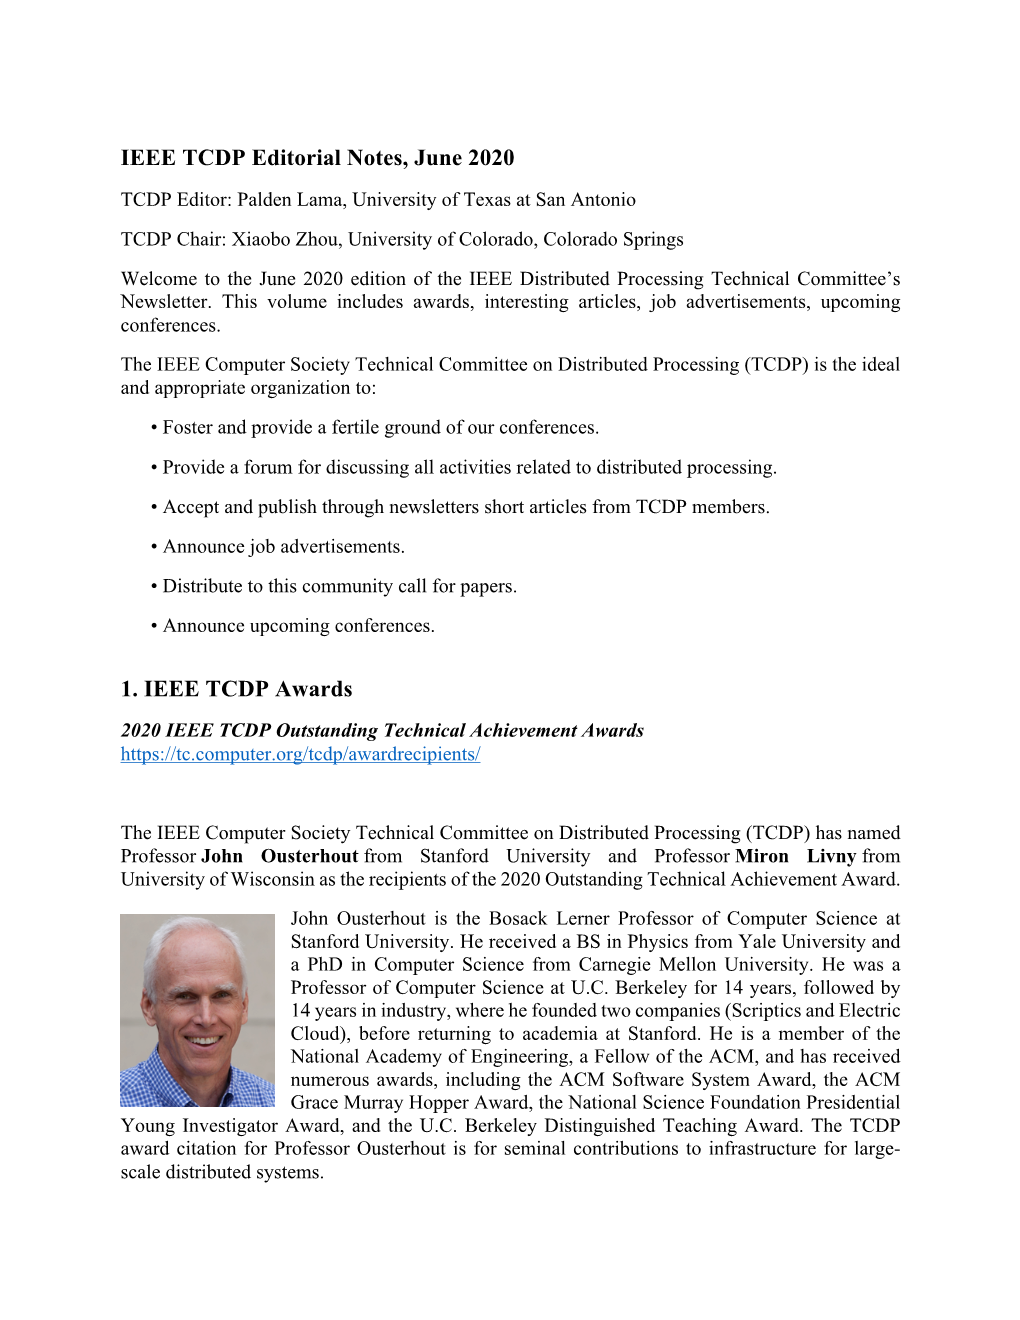 IEEE TCDP Editorial Notes, June 2020 1. IEEE TCDP Awards